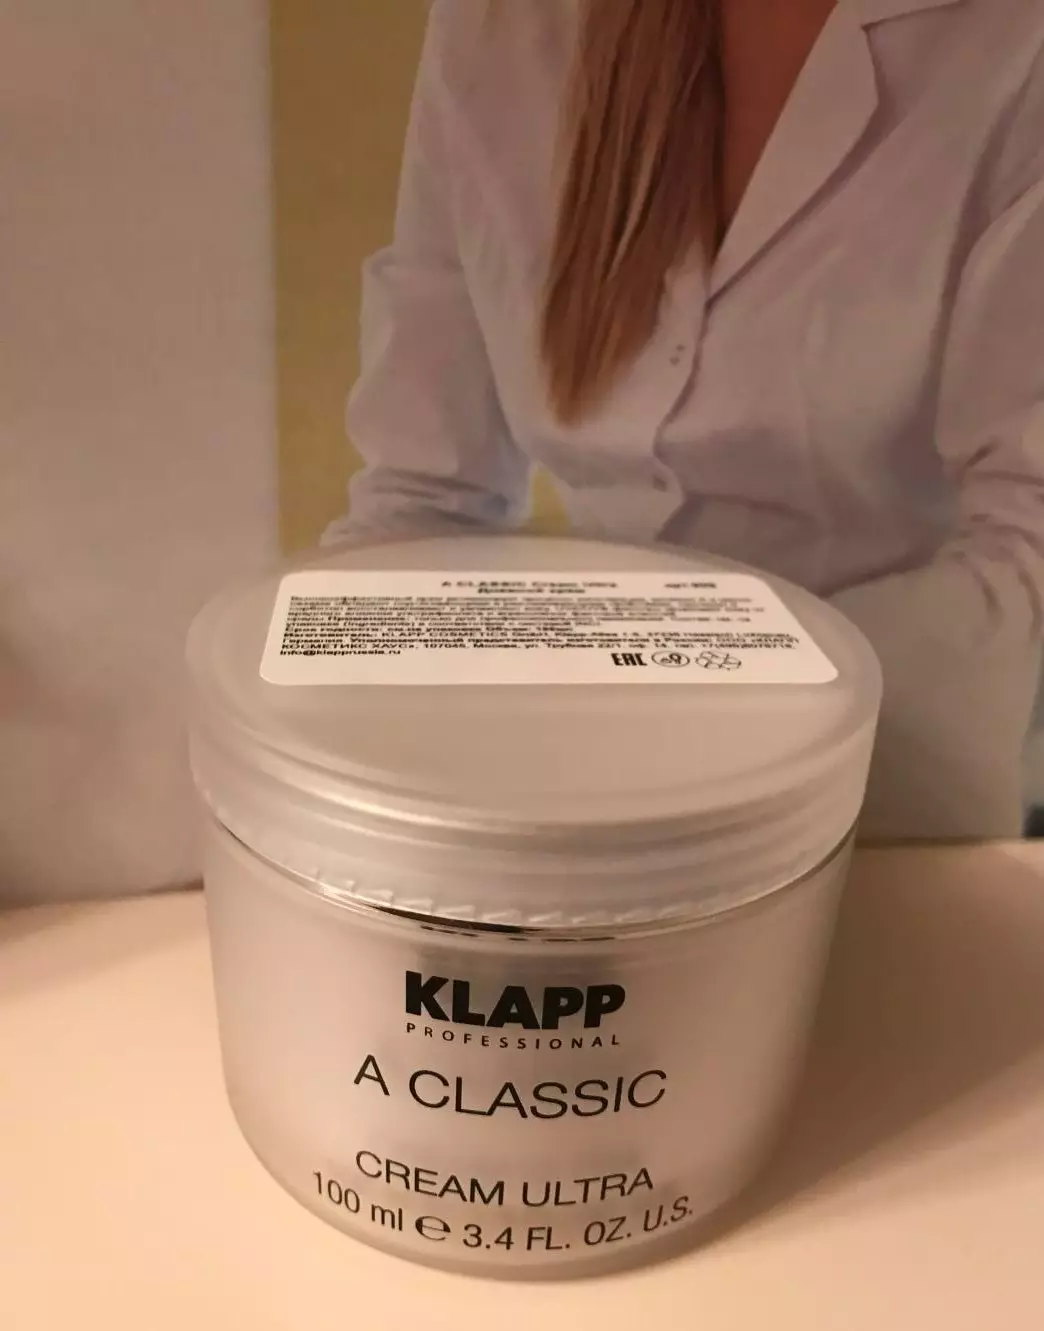 Kozmetika Klapp: Njemačka profesionalna kozmetika za lice i tijelo, recenzije kozmetičara 4661_17